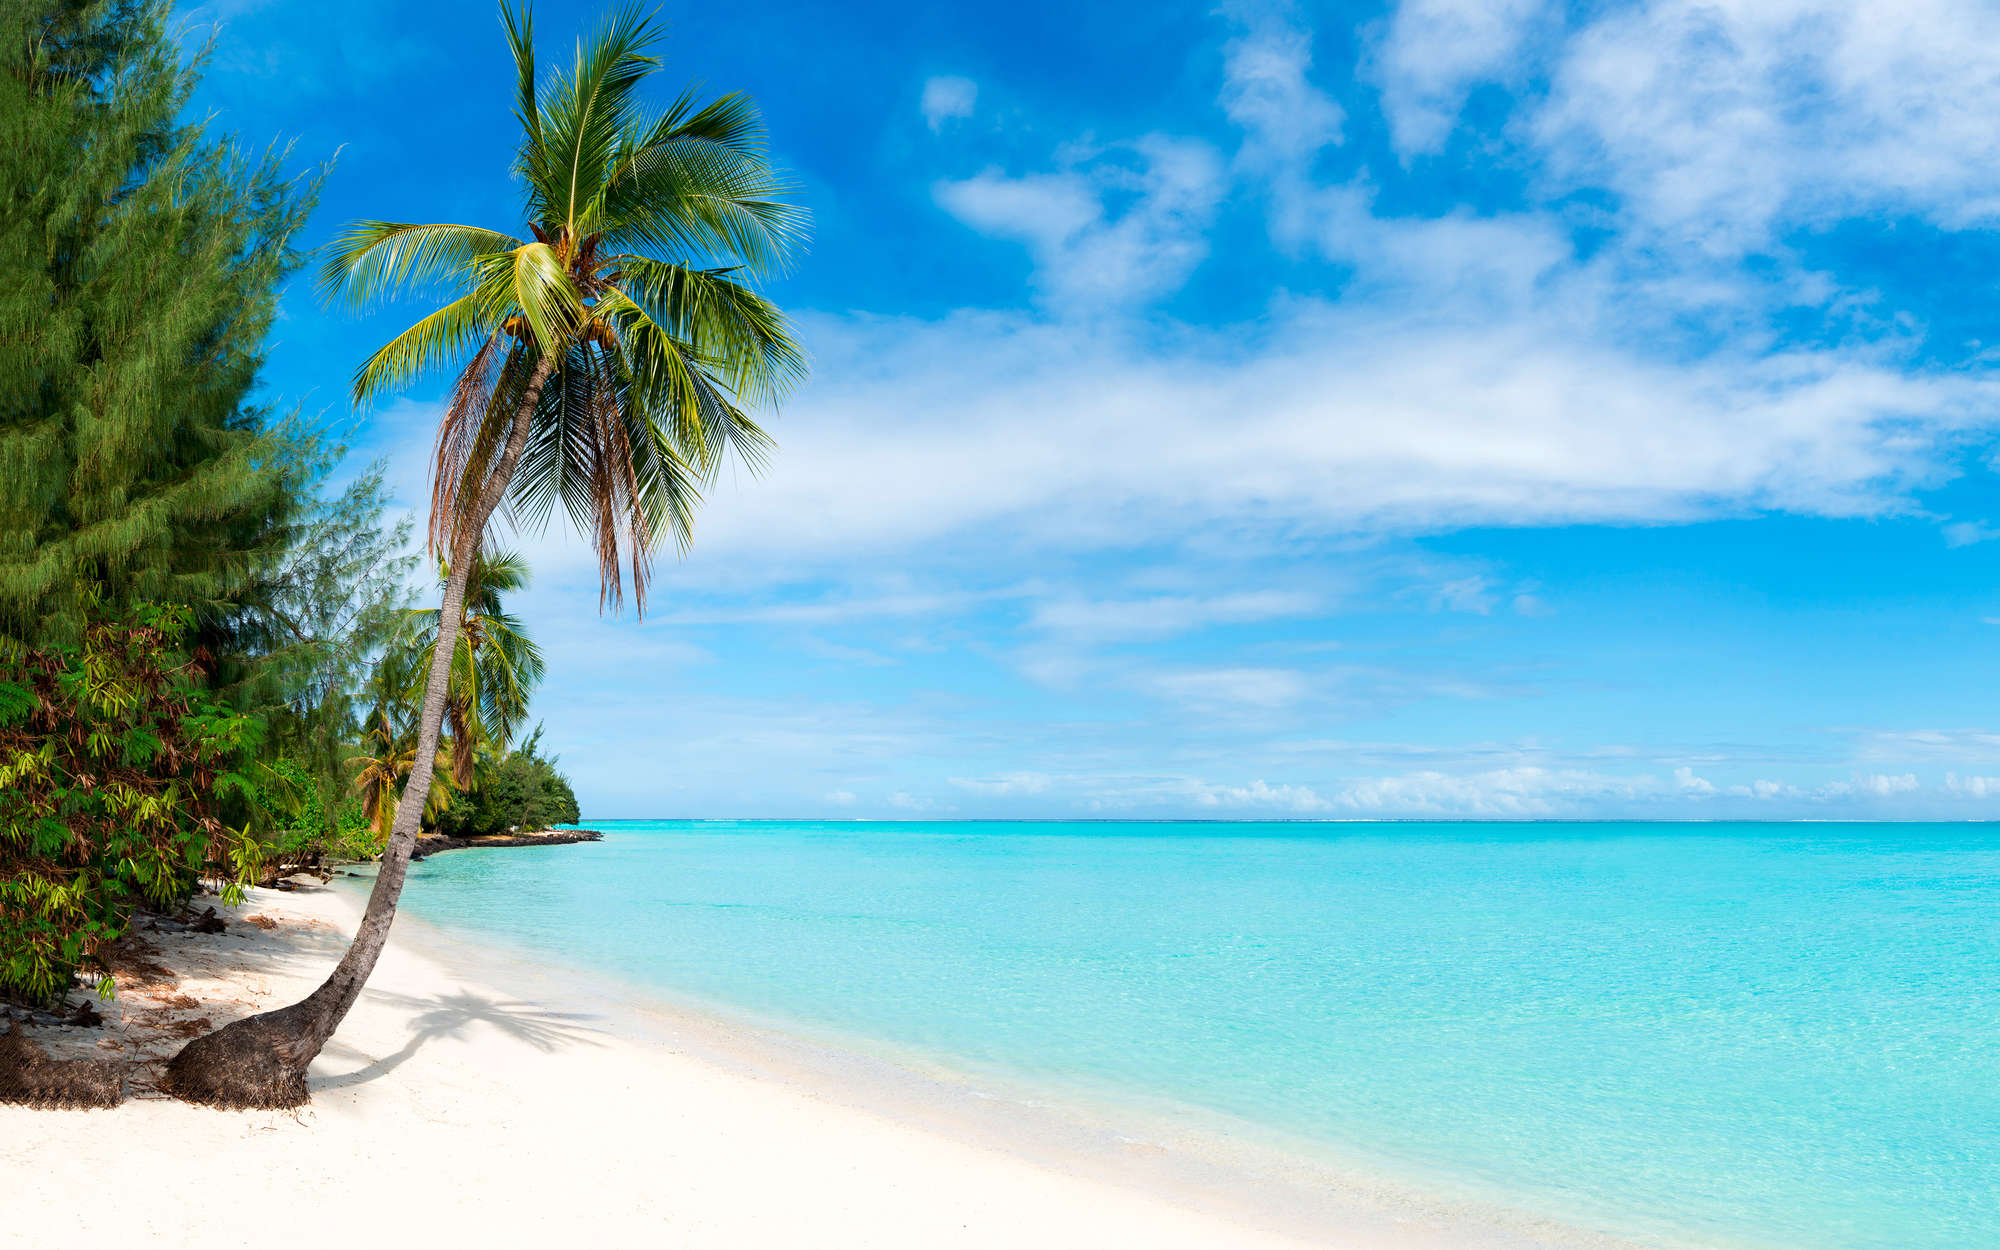             Photo wallpaper sandy beach with palm tree - Matt smooth fleece
        